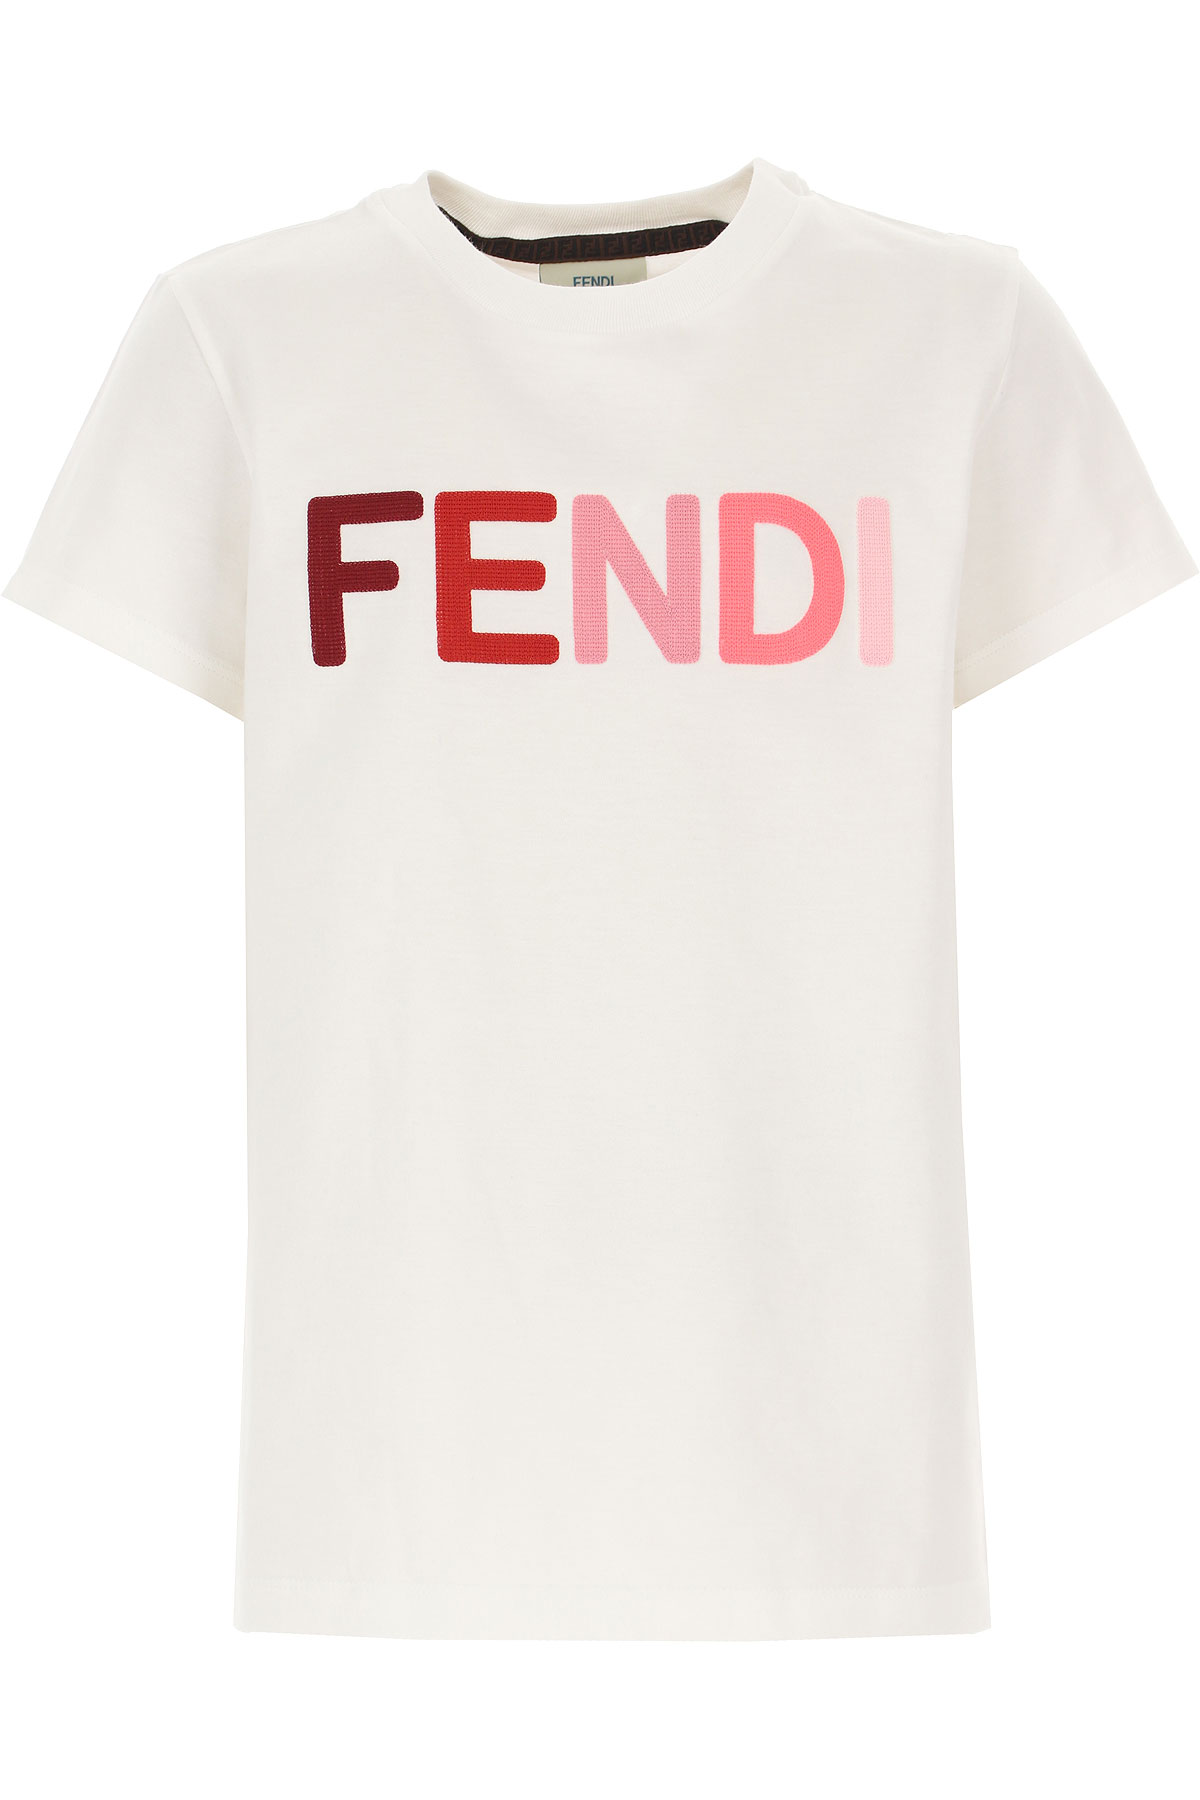 Girls Clothing Fendi, Style code: jfi203-7aj-f0tu9